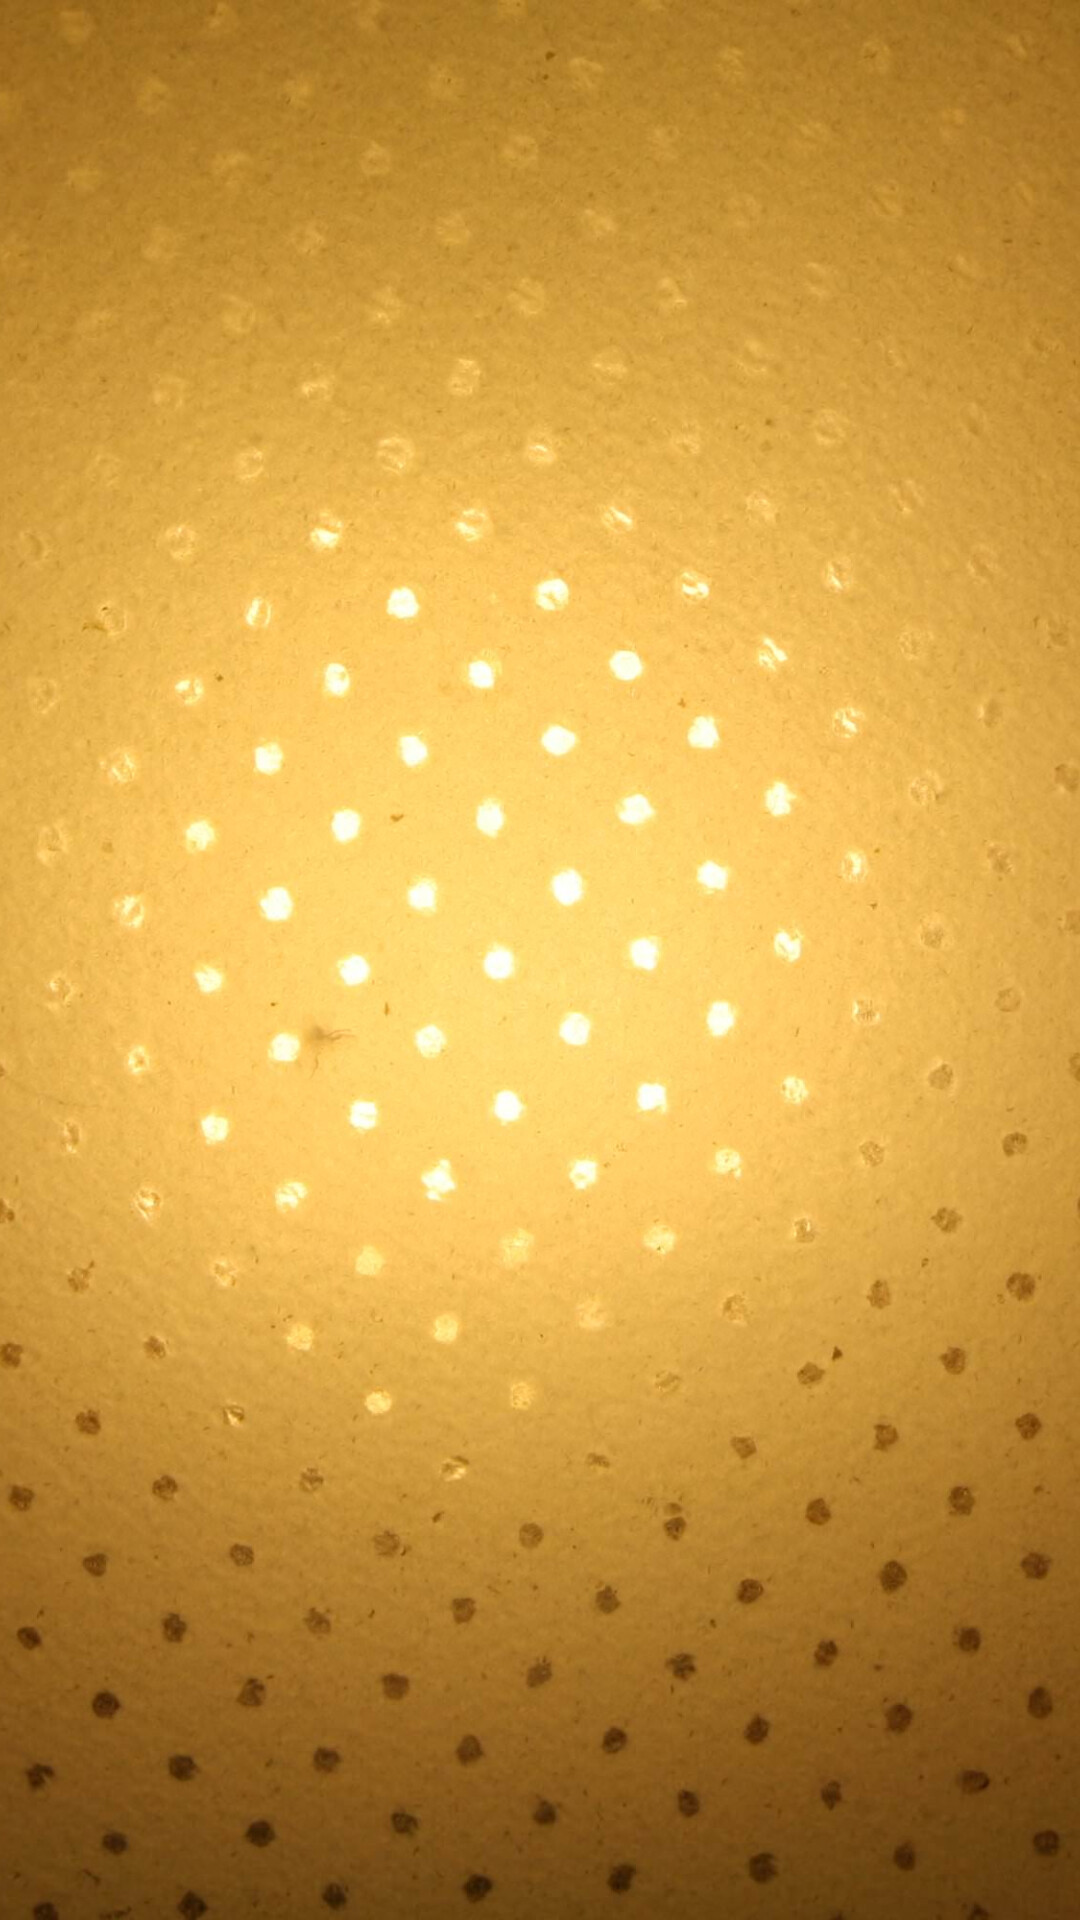 Gold Dots: Golden Polka Dot pattern style, Golden spots in clusters, Symmetry. 1080x1920 Full HD Background.